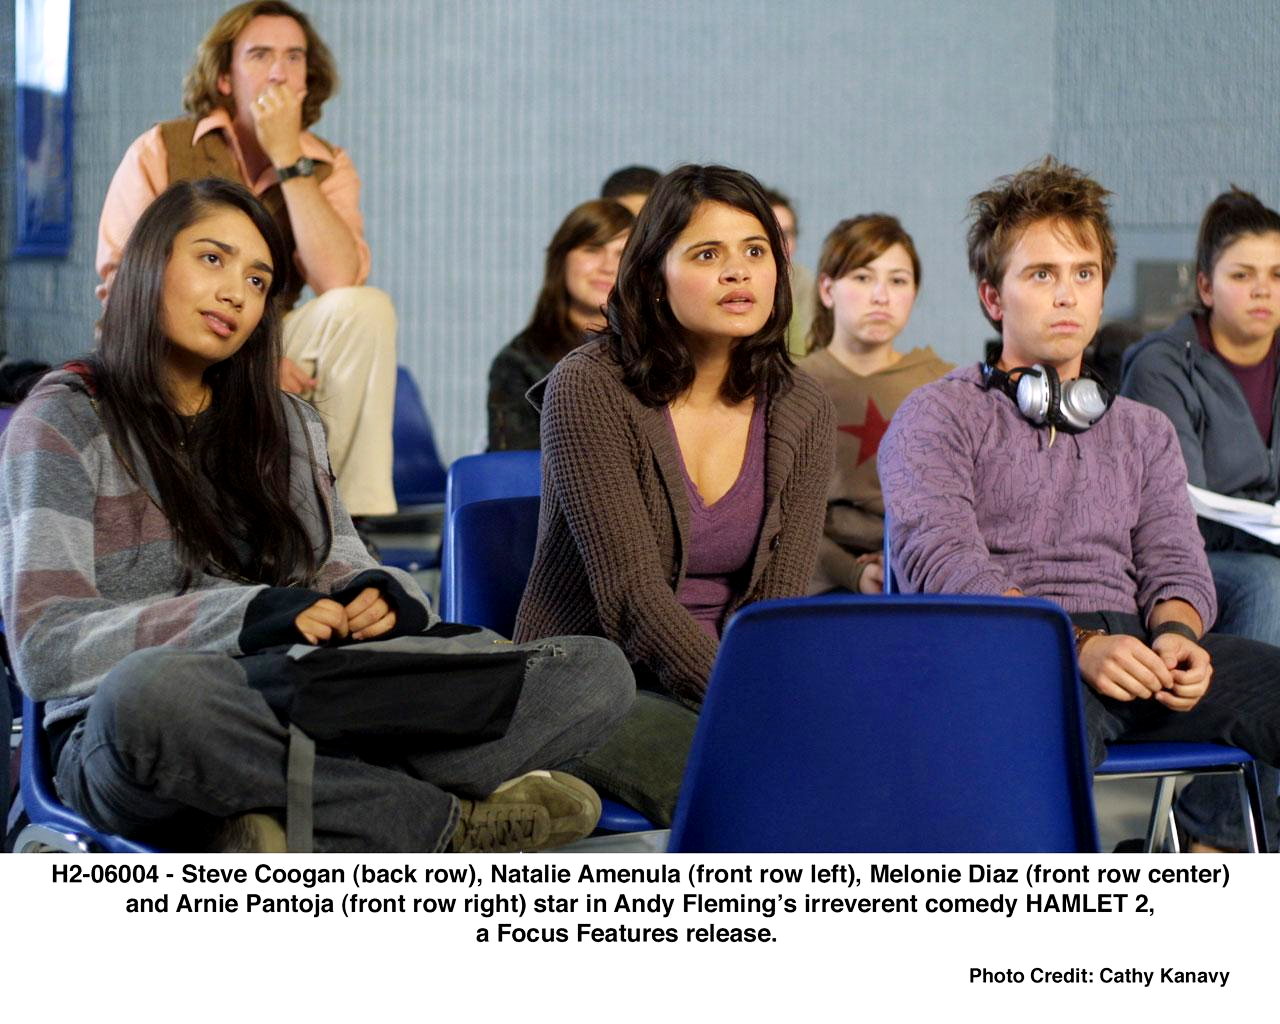 Natalie Amenula, Steve Coogan, Melonie Diaz and Arnie Pantoja in Focus Features' Hamlet 2 (2008). Photo Credit: Cathy Kanavy.